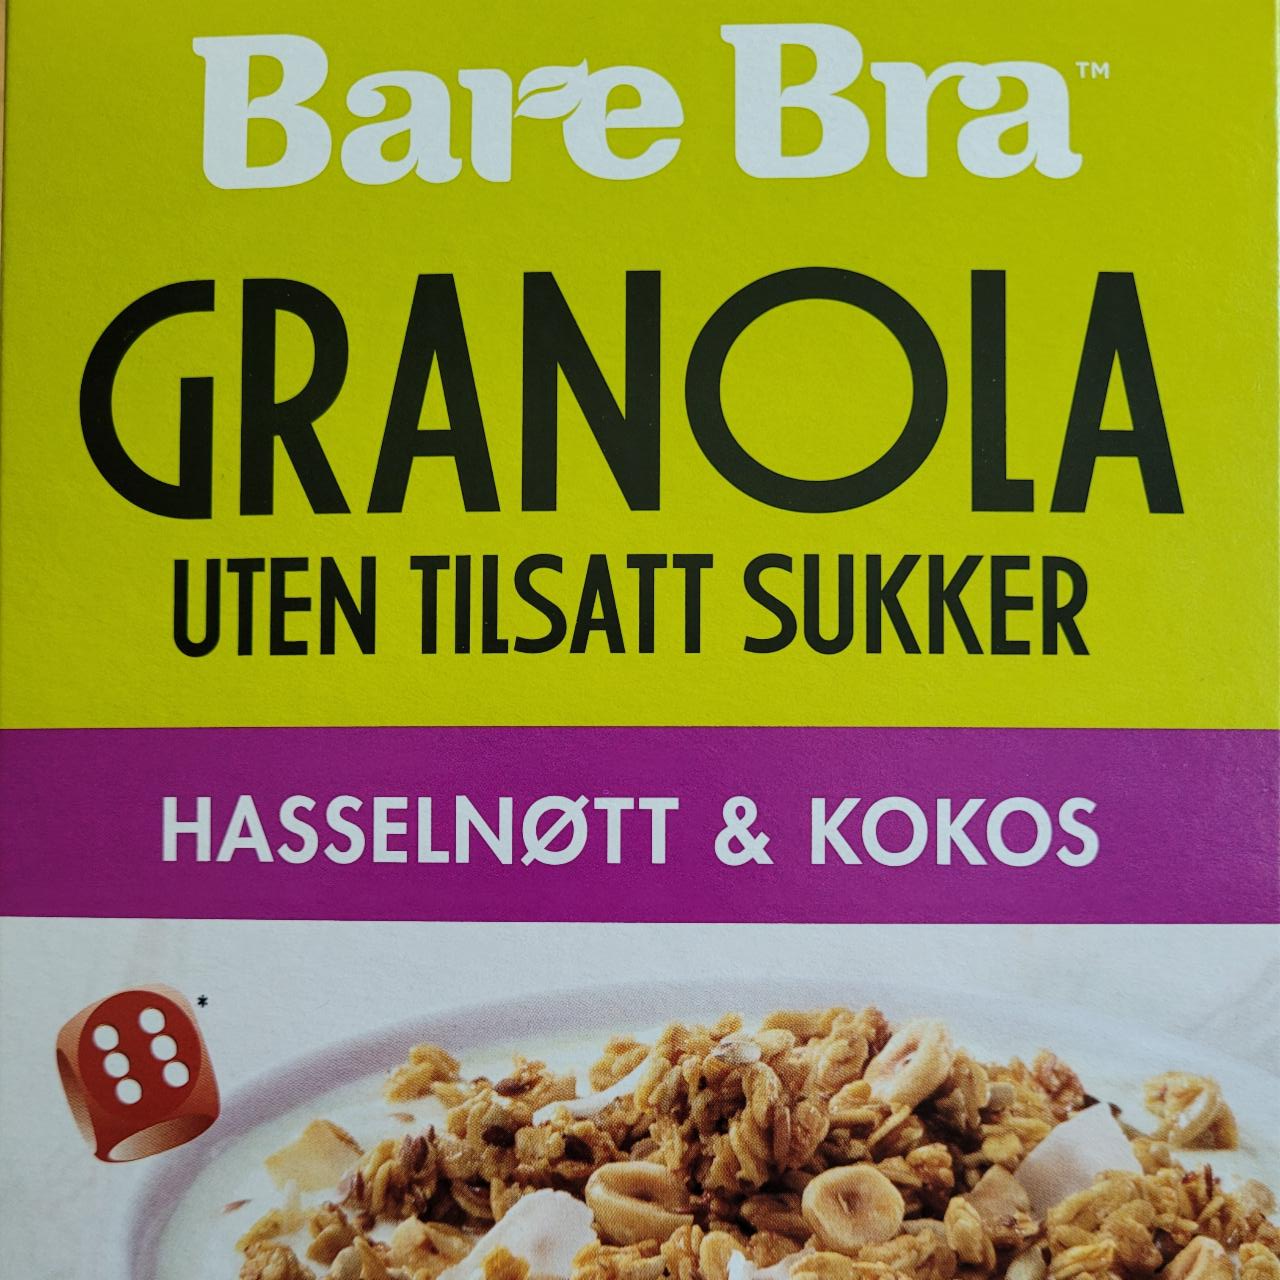 Fotografie - Bare Bra granola hasselnøtt & kokos